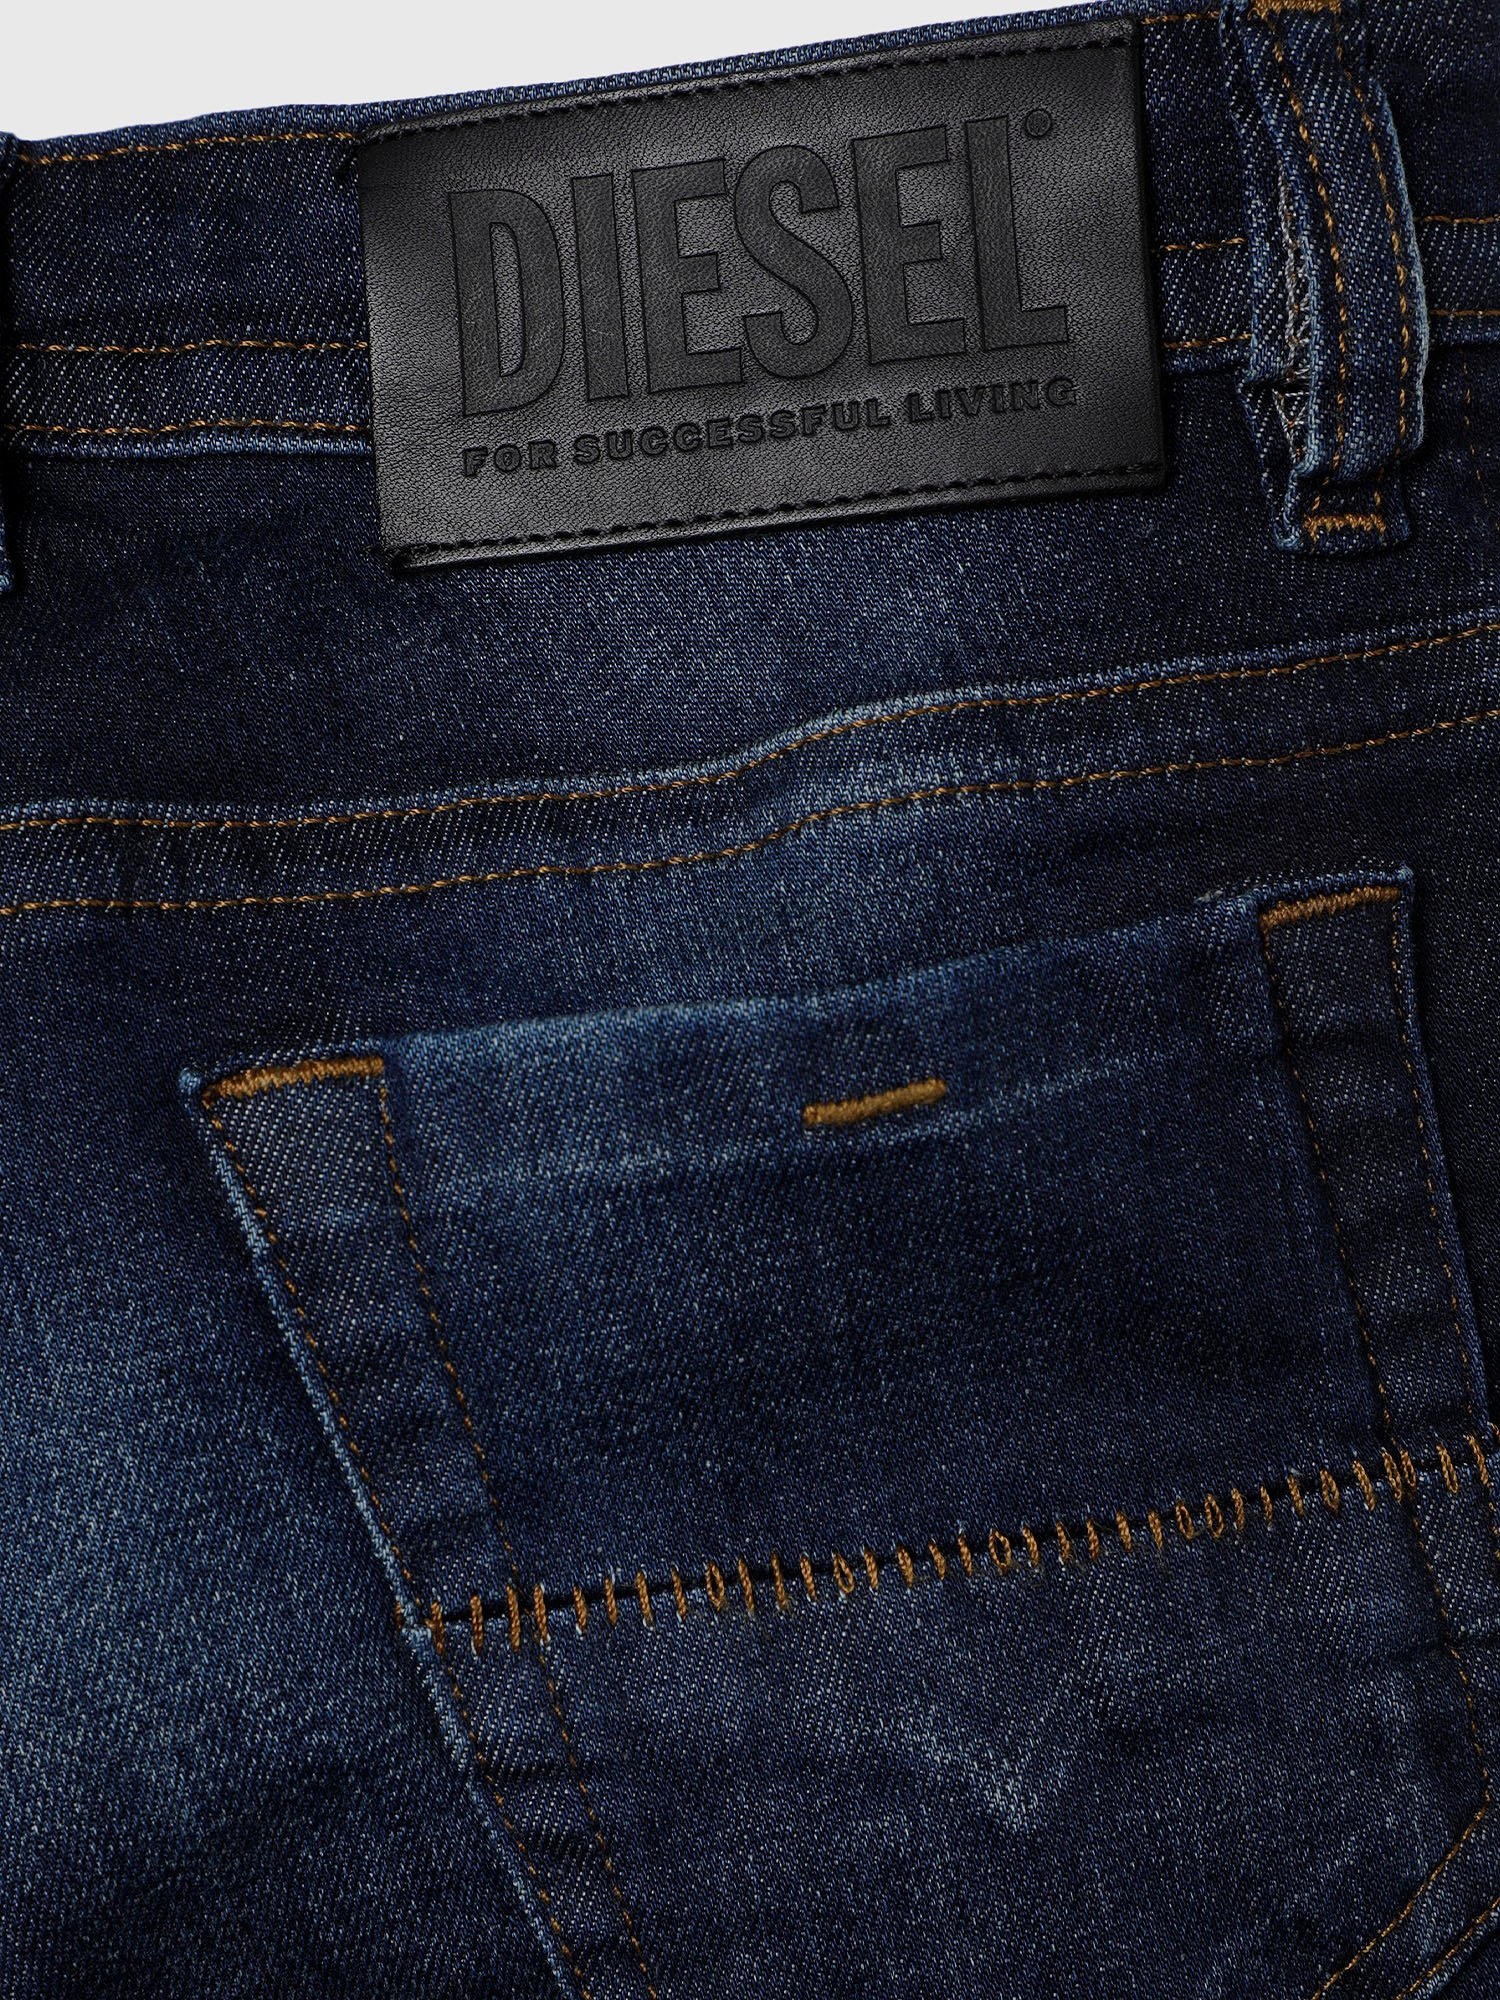 Diesel - THOMMER-J, Dark Blue - Image 4